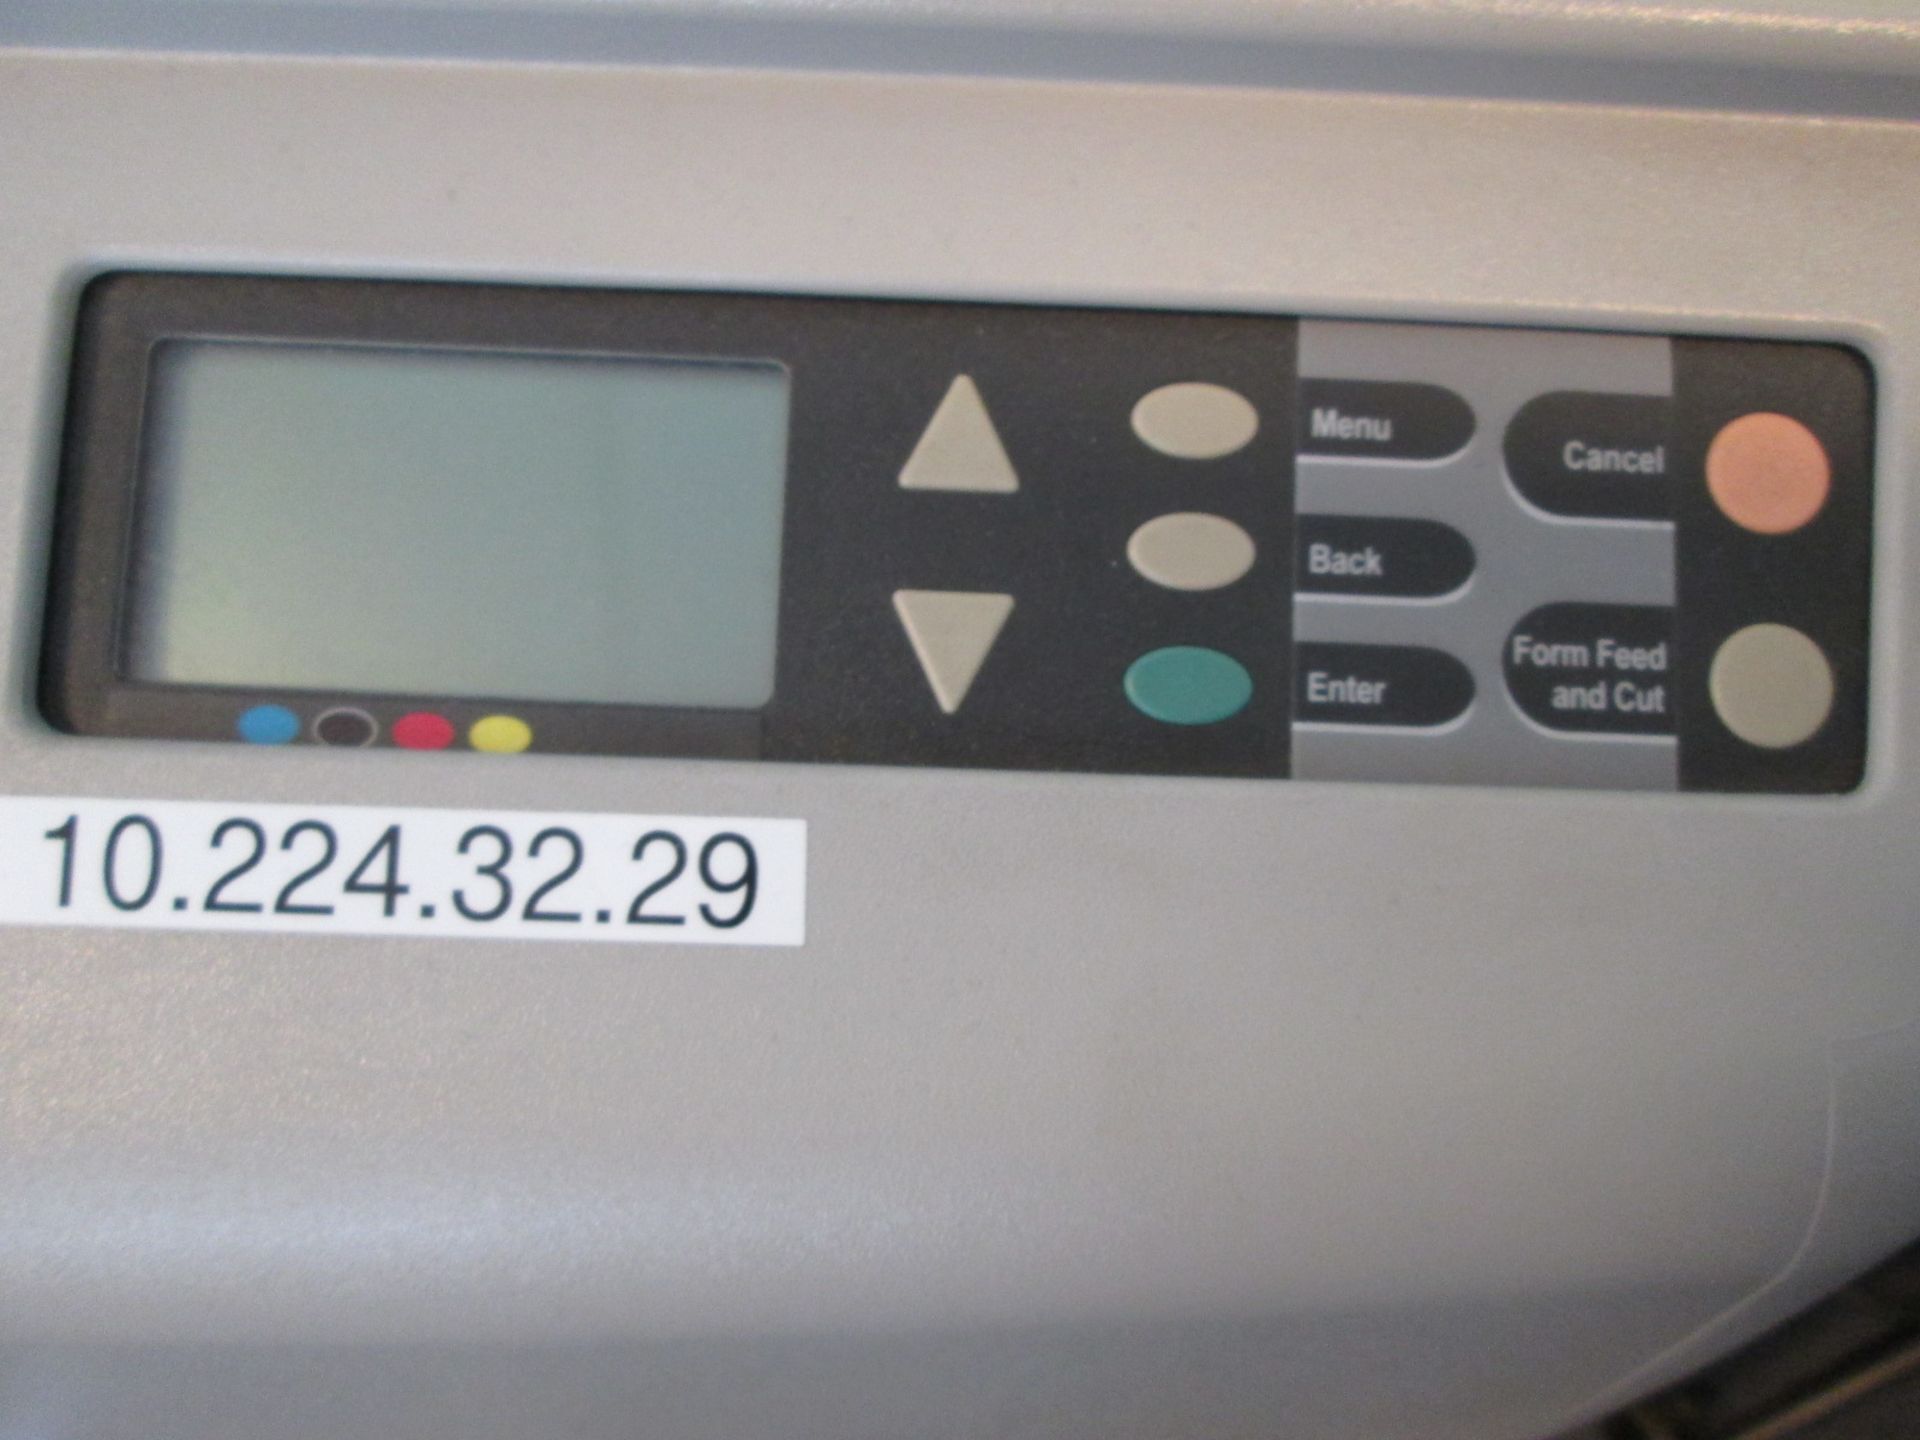 HP Designjet 500 A0 Colour Printer. S/N SG478103F. Model # C7770B - Image 3 of 6